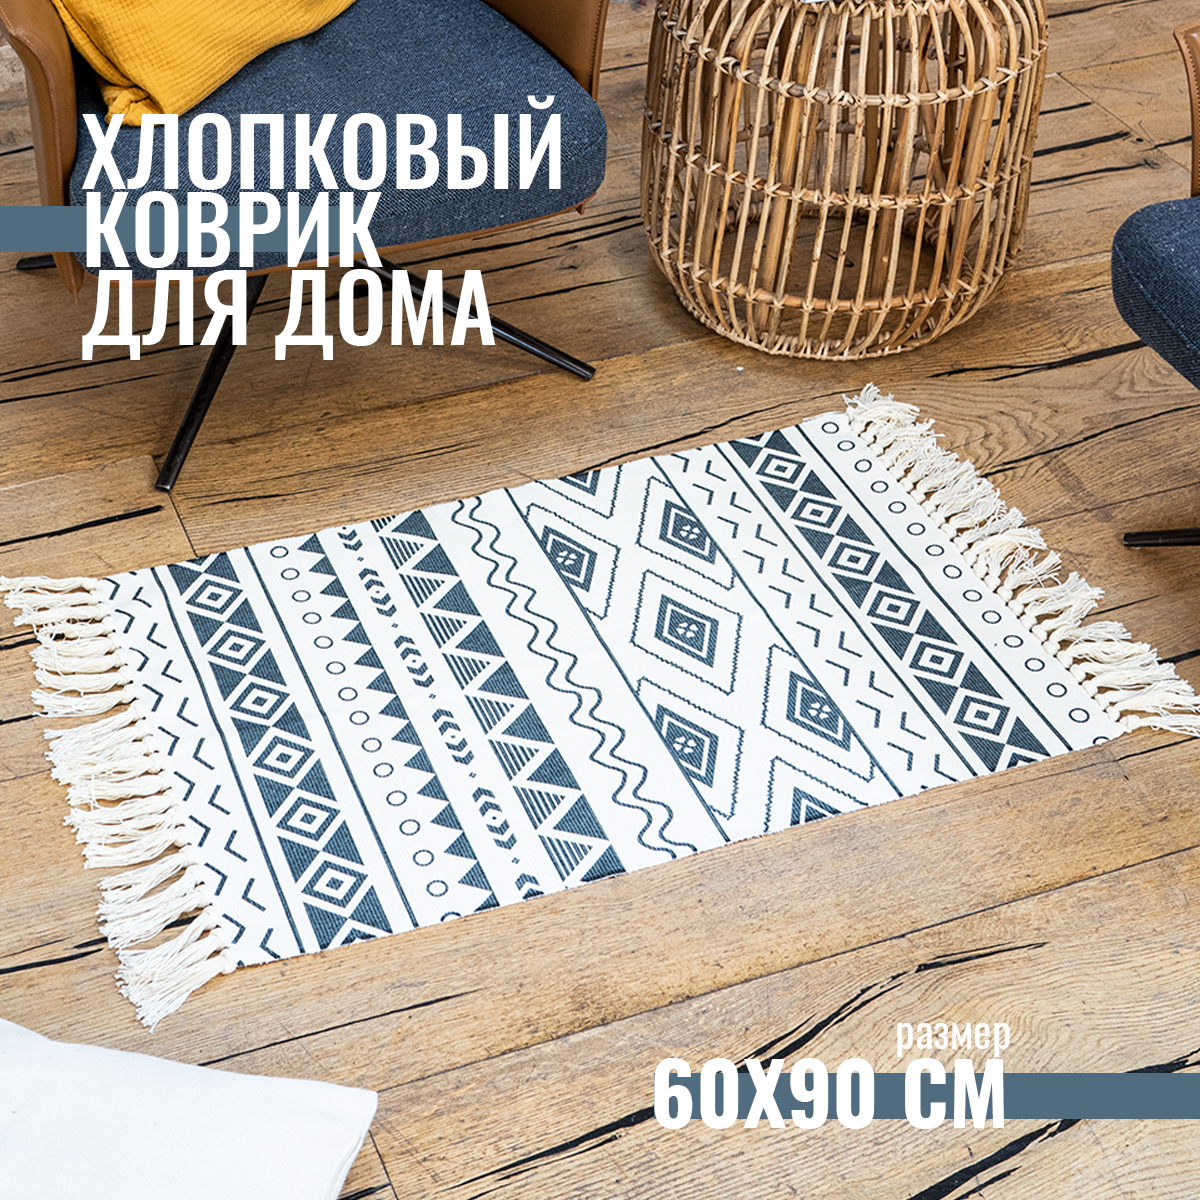 Хлопковый коврик Homfox для дома 60x90 см - фото 1